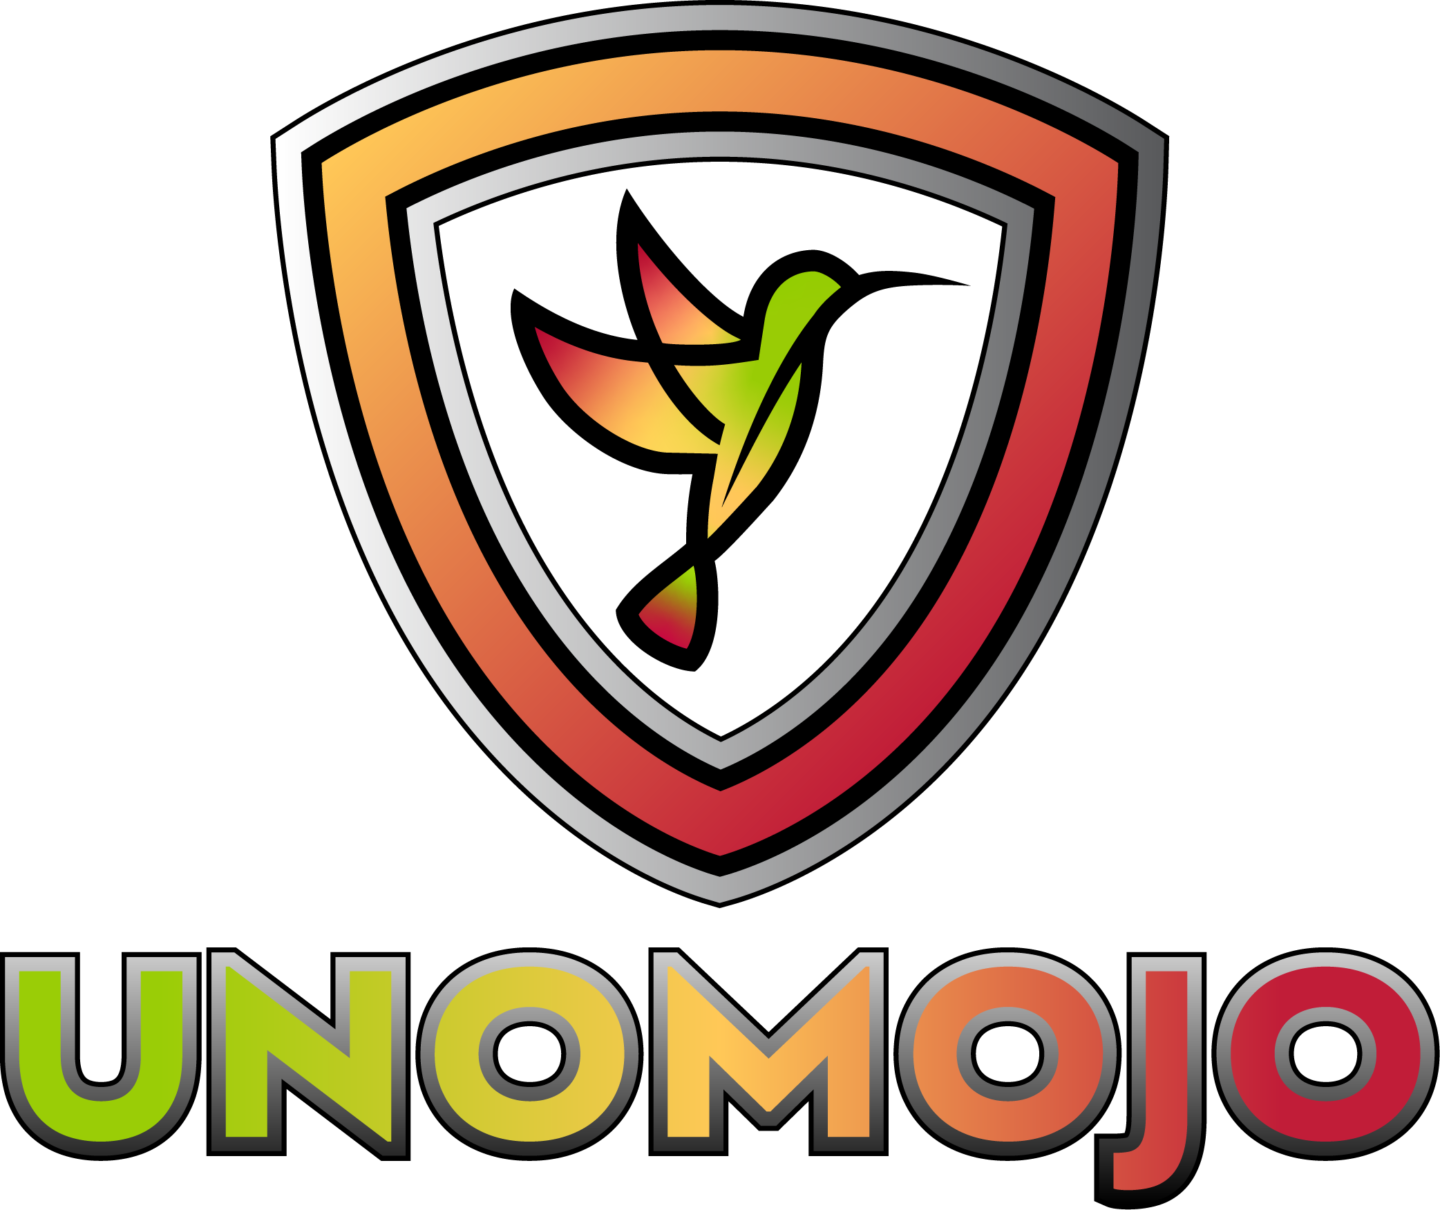 Unomojo logo, a shield with a hummingbird inside